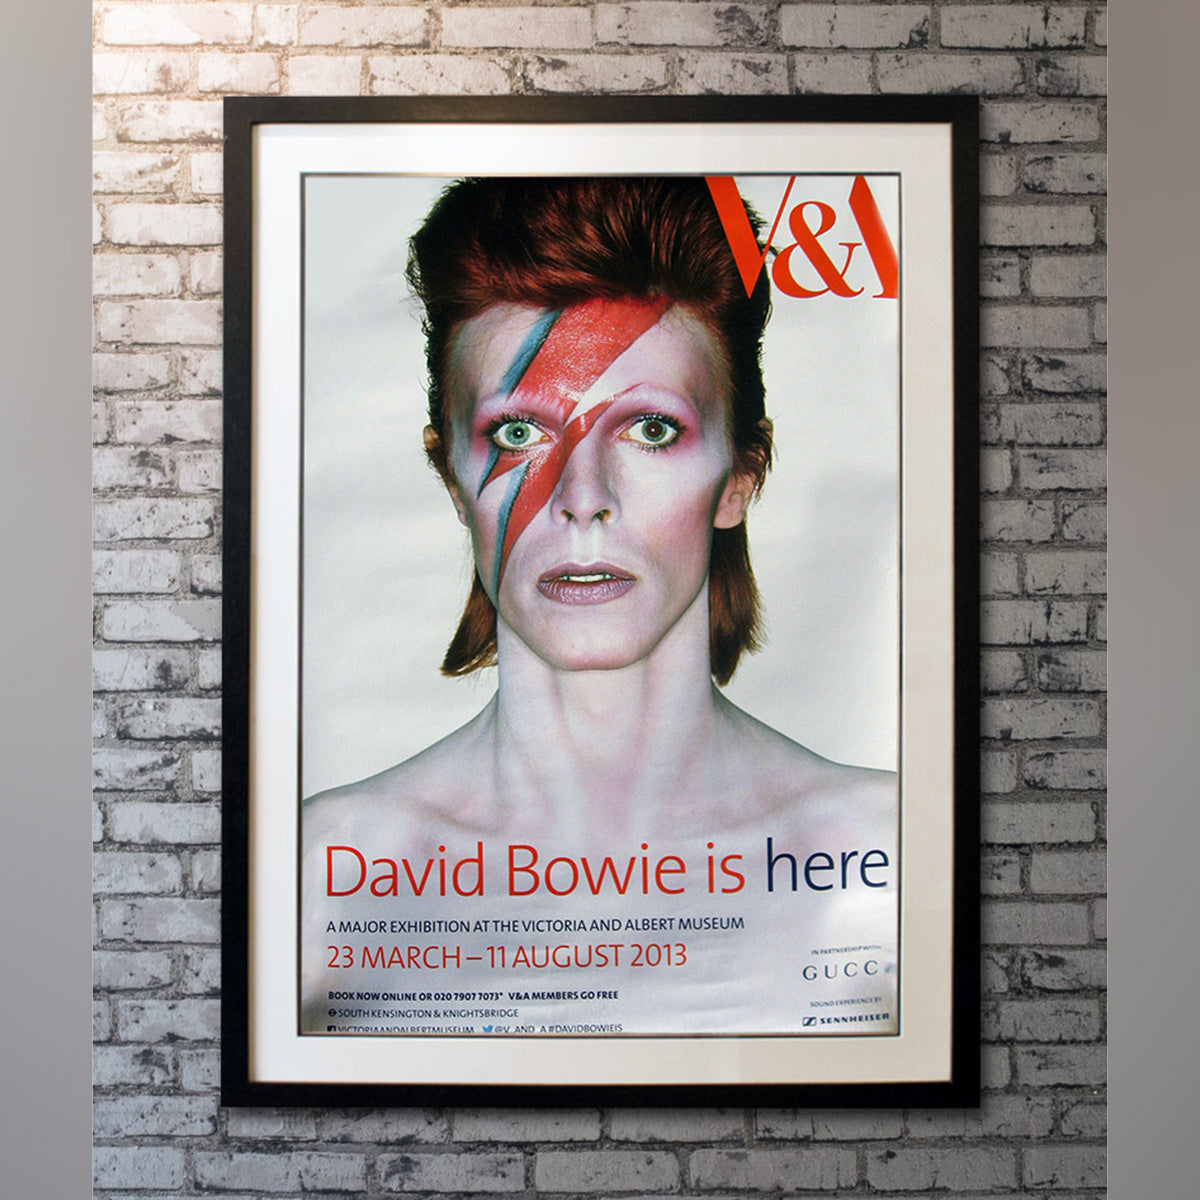 Original Movie Poster of David Bowie Va Exhibition Poster (2013)